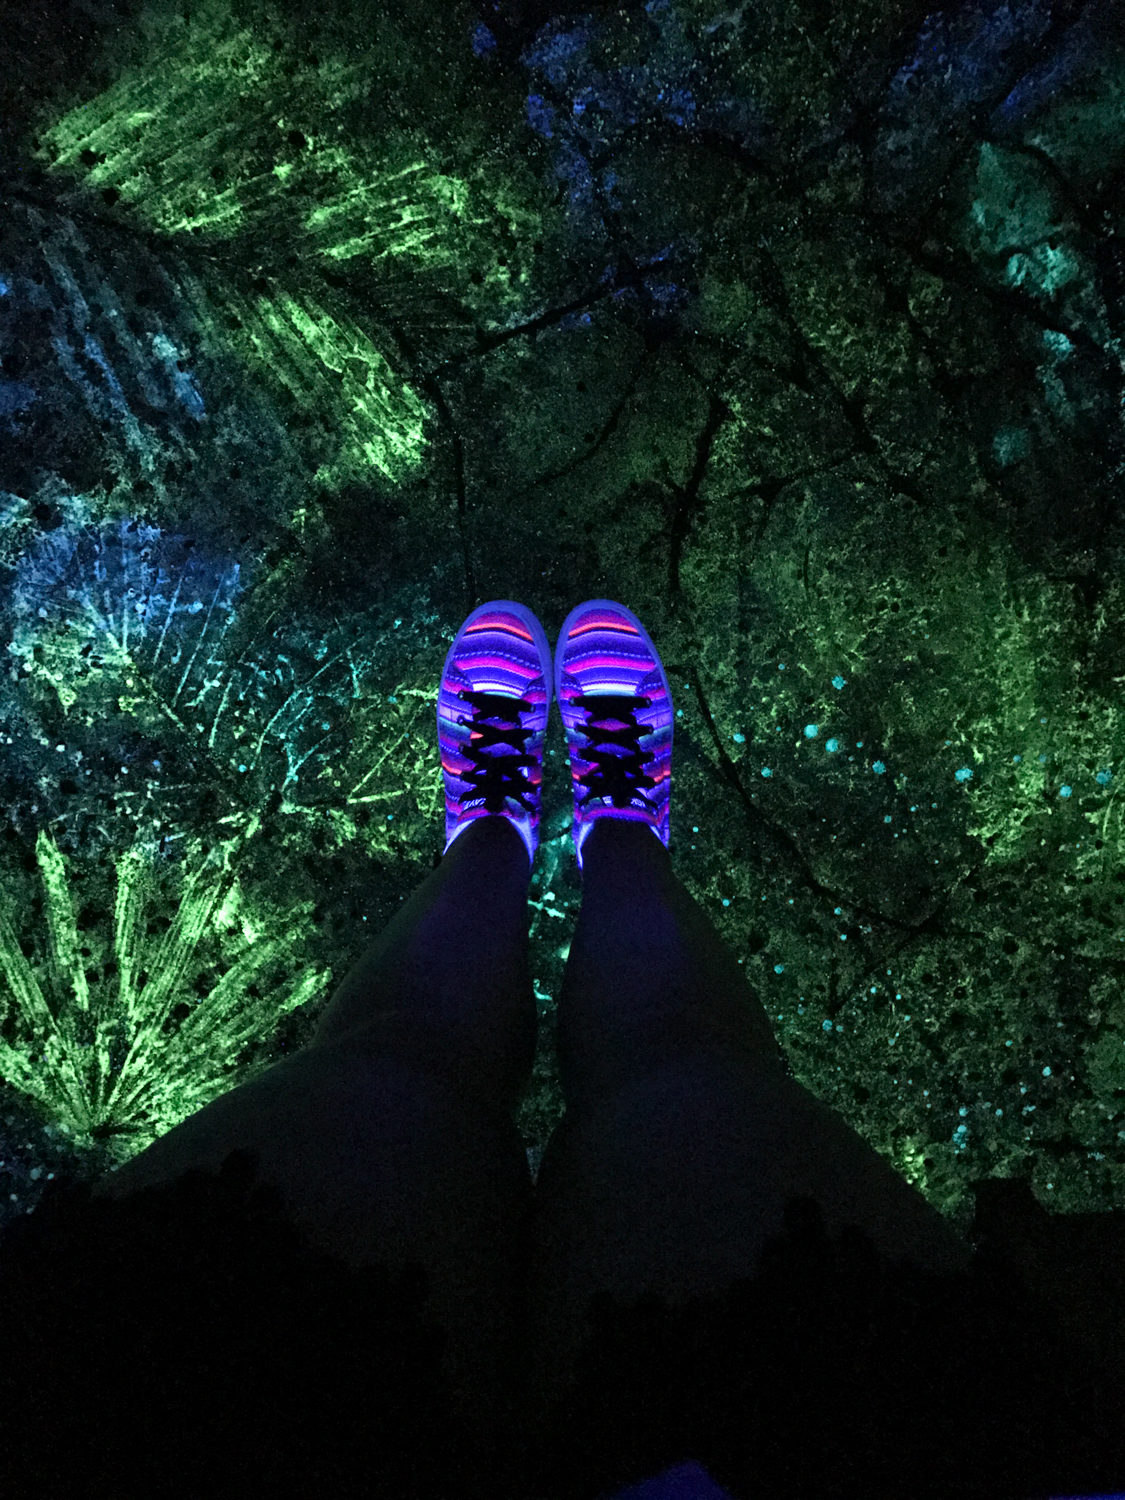 At night, glowing sidewalks light the way in Disney's Pandora - The World of Avatar 